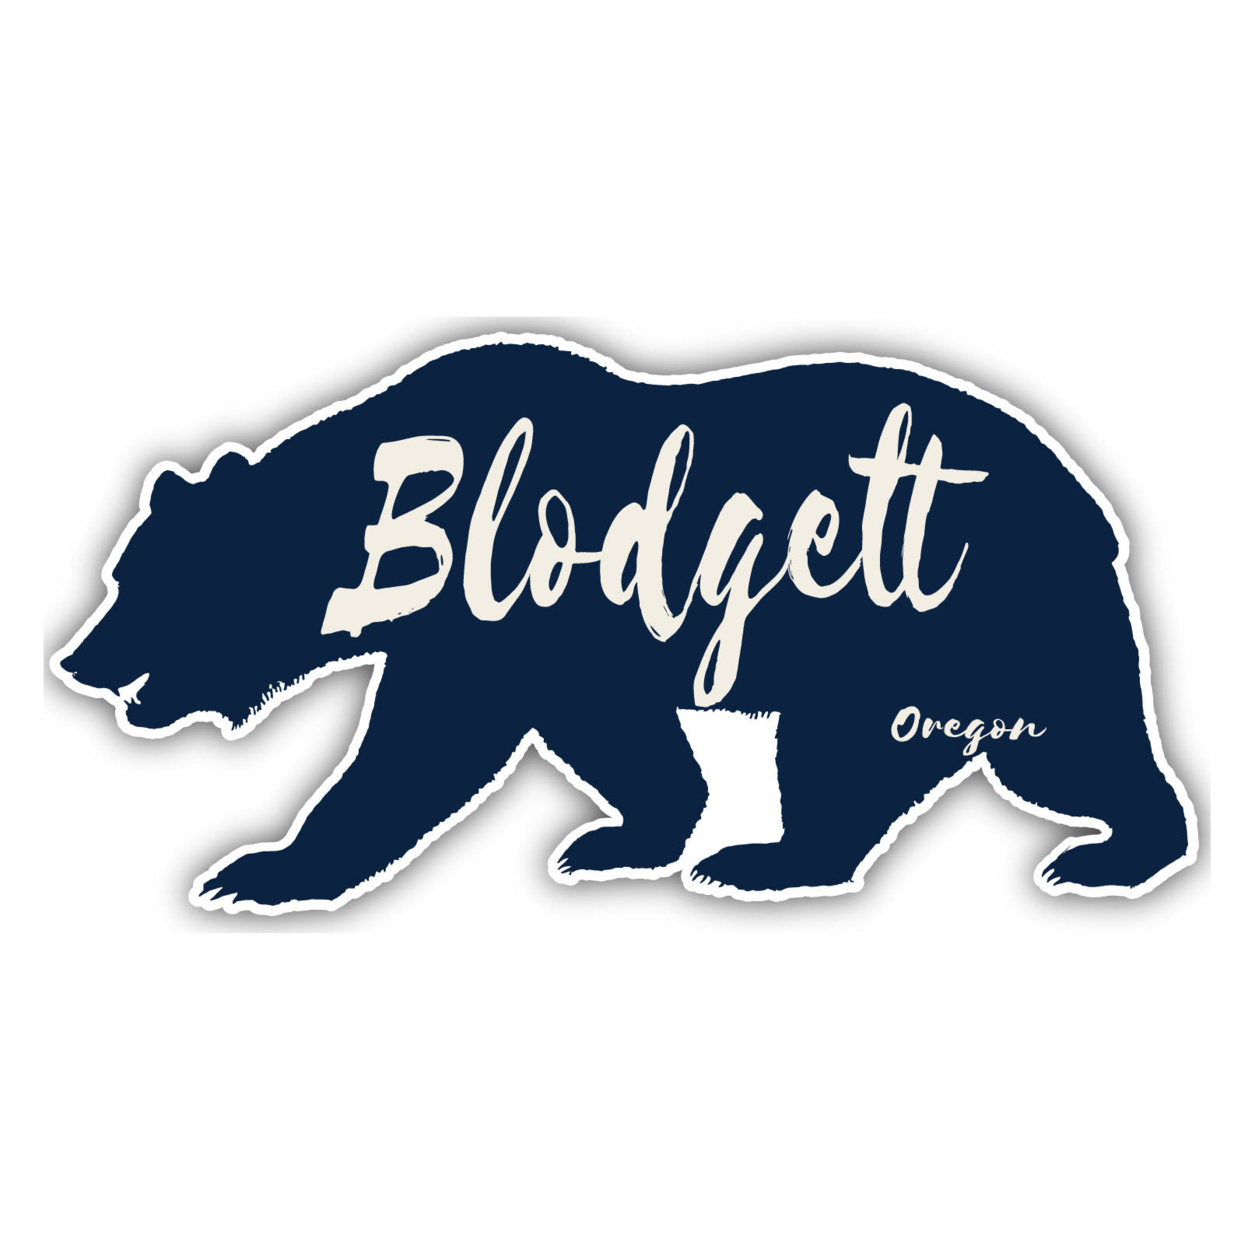 Blodgett Oregon Souvenir Decorative Stickers (Choose Theme And Size) - 4-Pack, 10-Inch, Bear